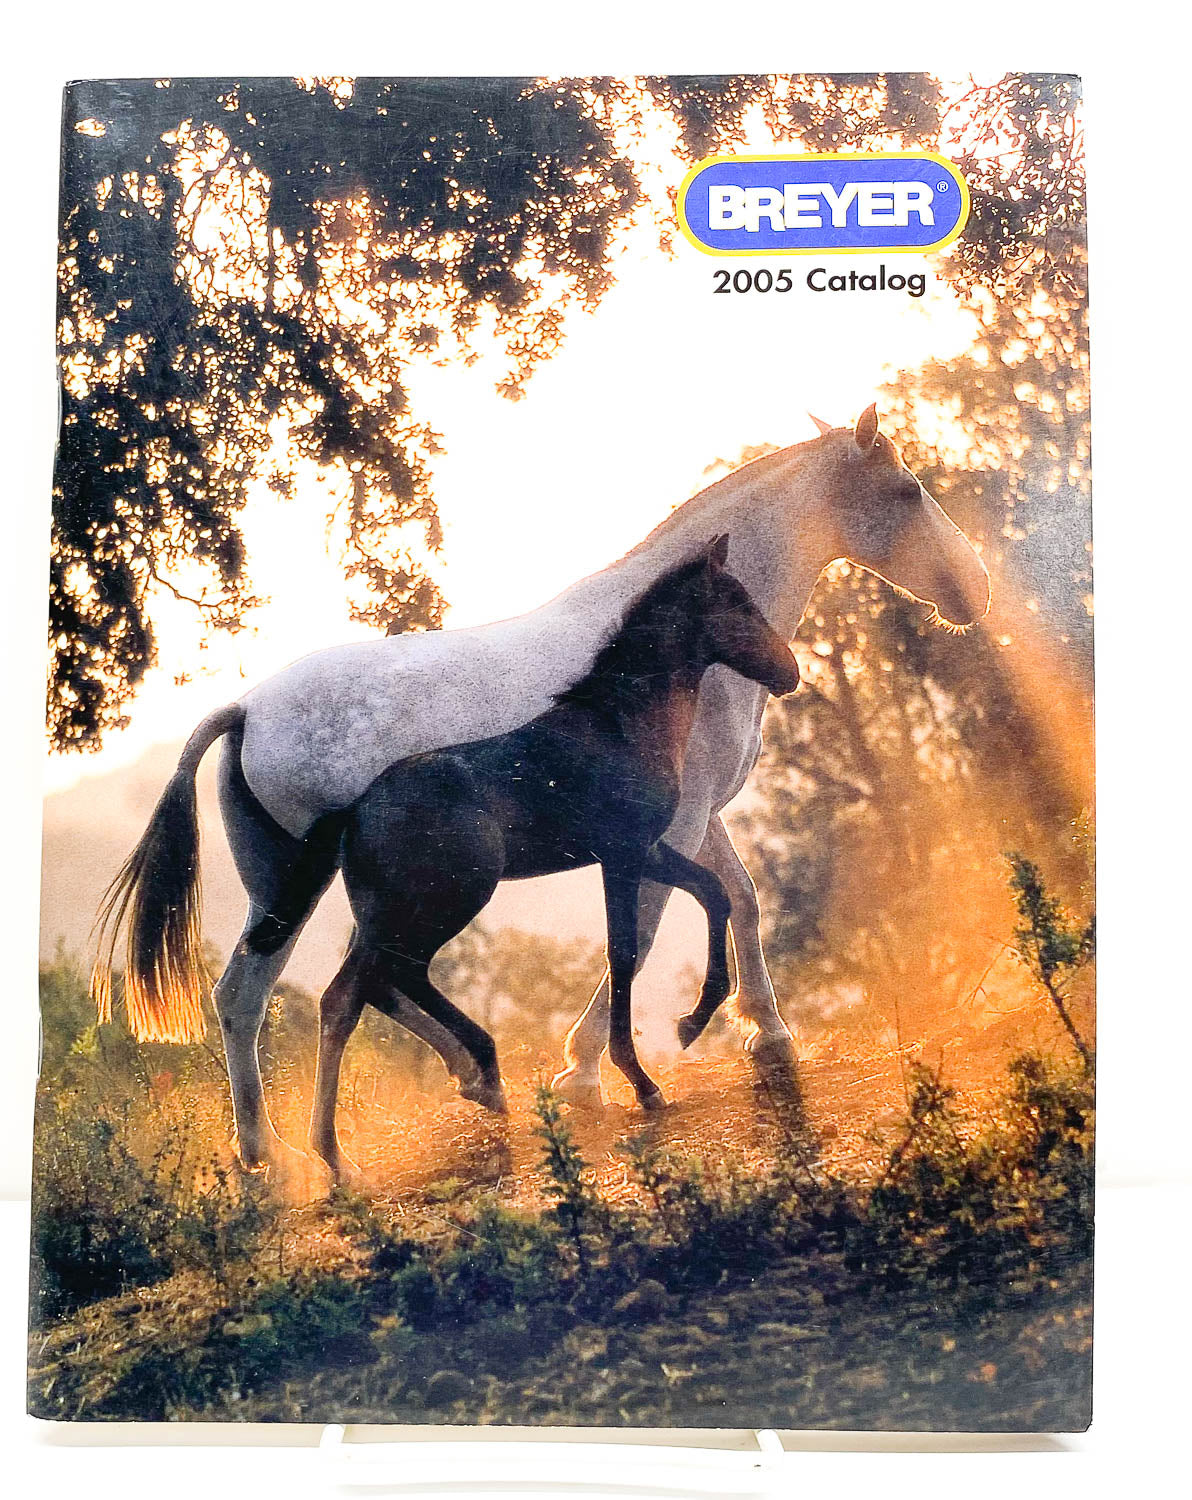 2005 Breyer Dealer Catalog